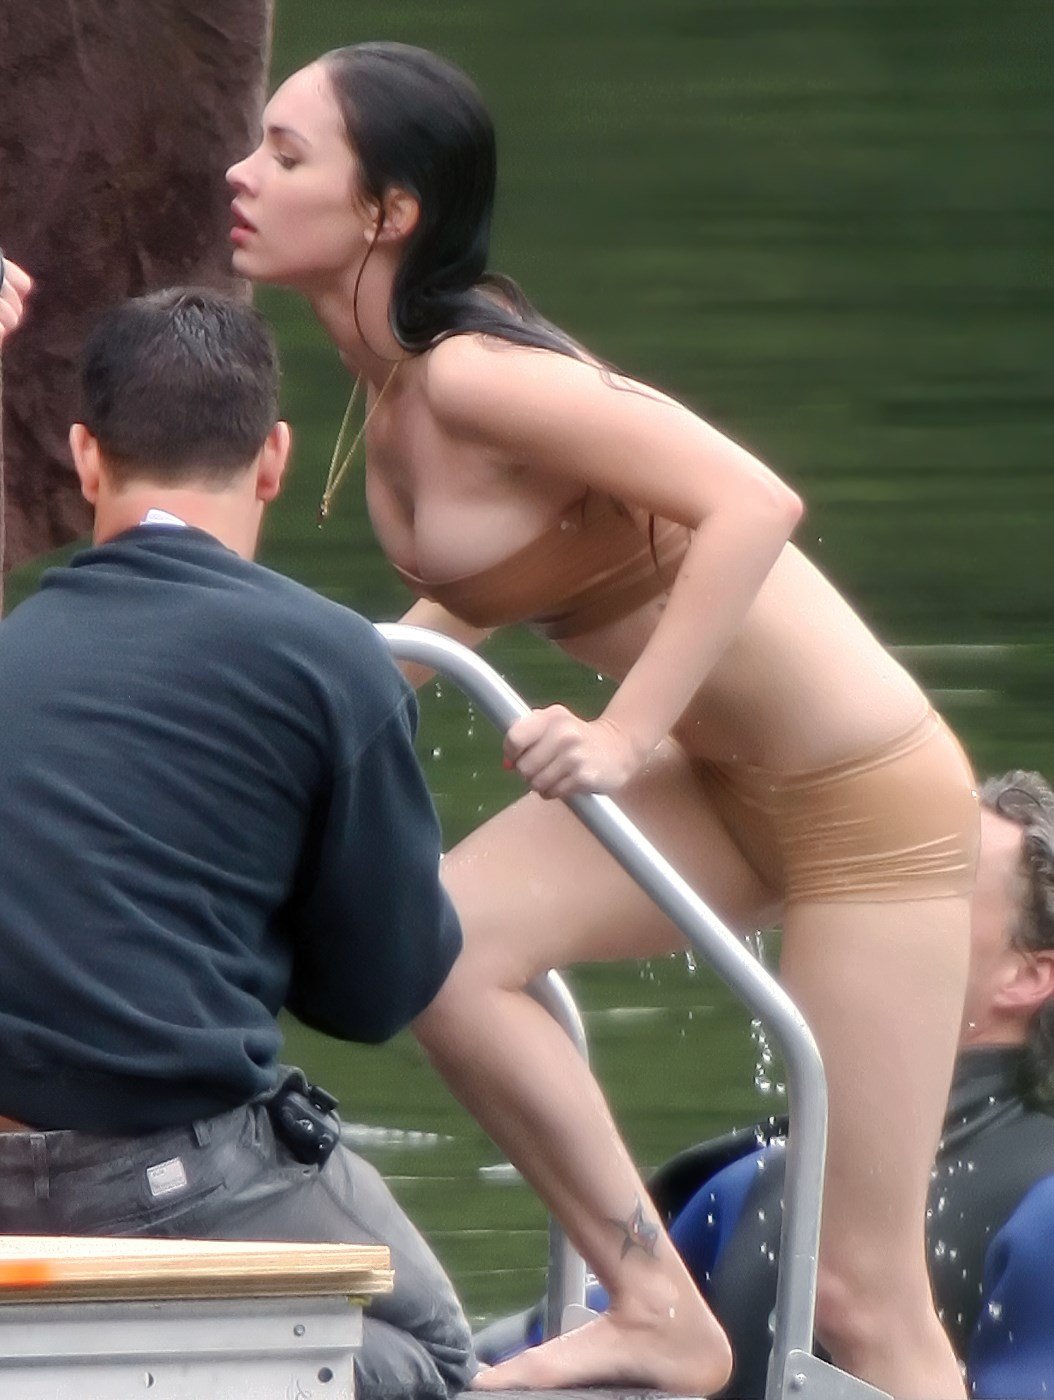 Megan Fox Nude Photos Remastered And Enhanced.